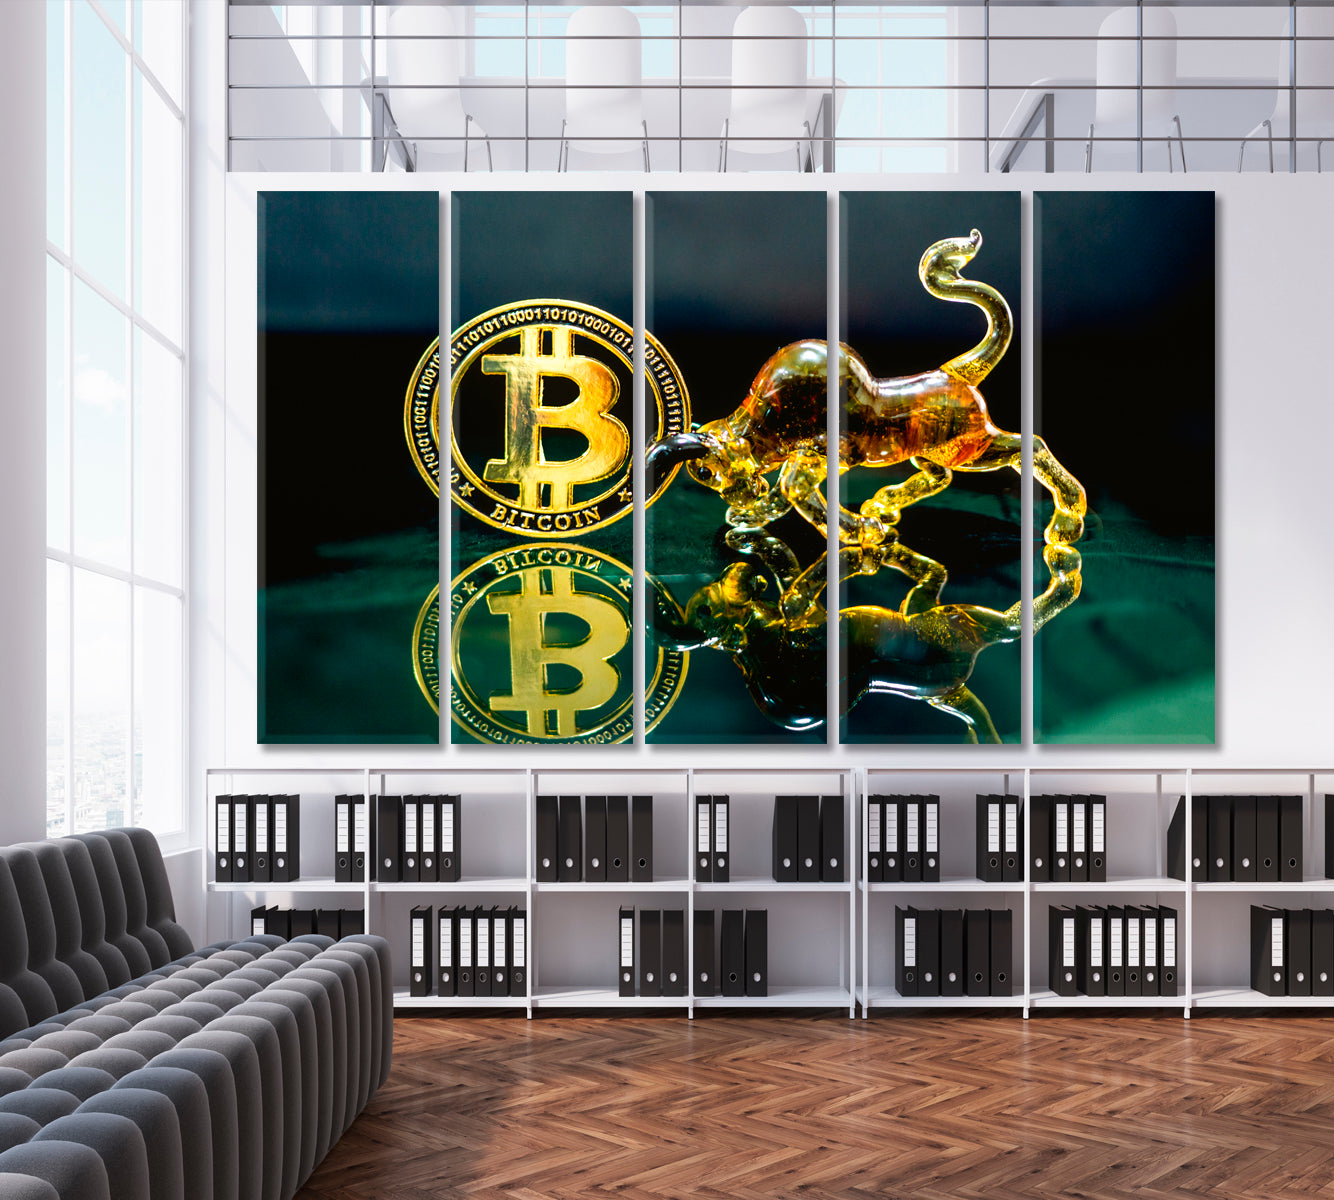 Bitcoin and Bull Business Concept Wall Art Artesty 5 panels 36" x 24" 